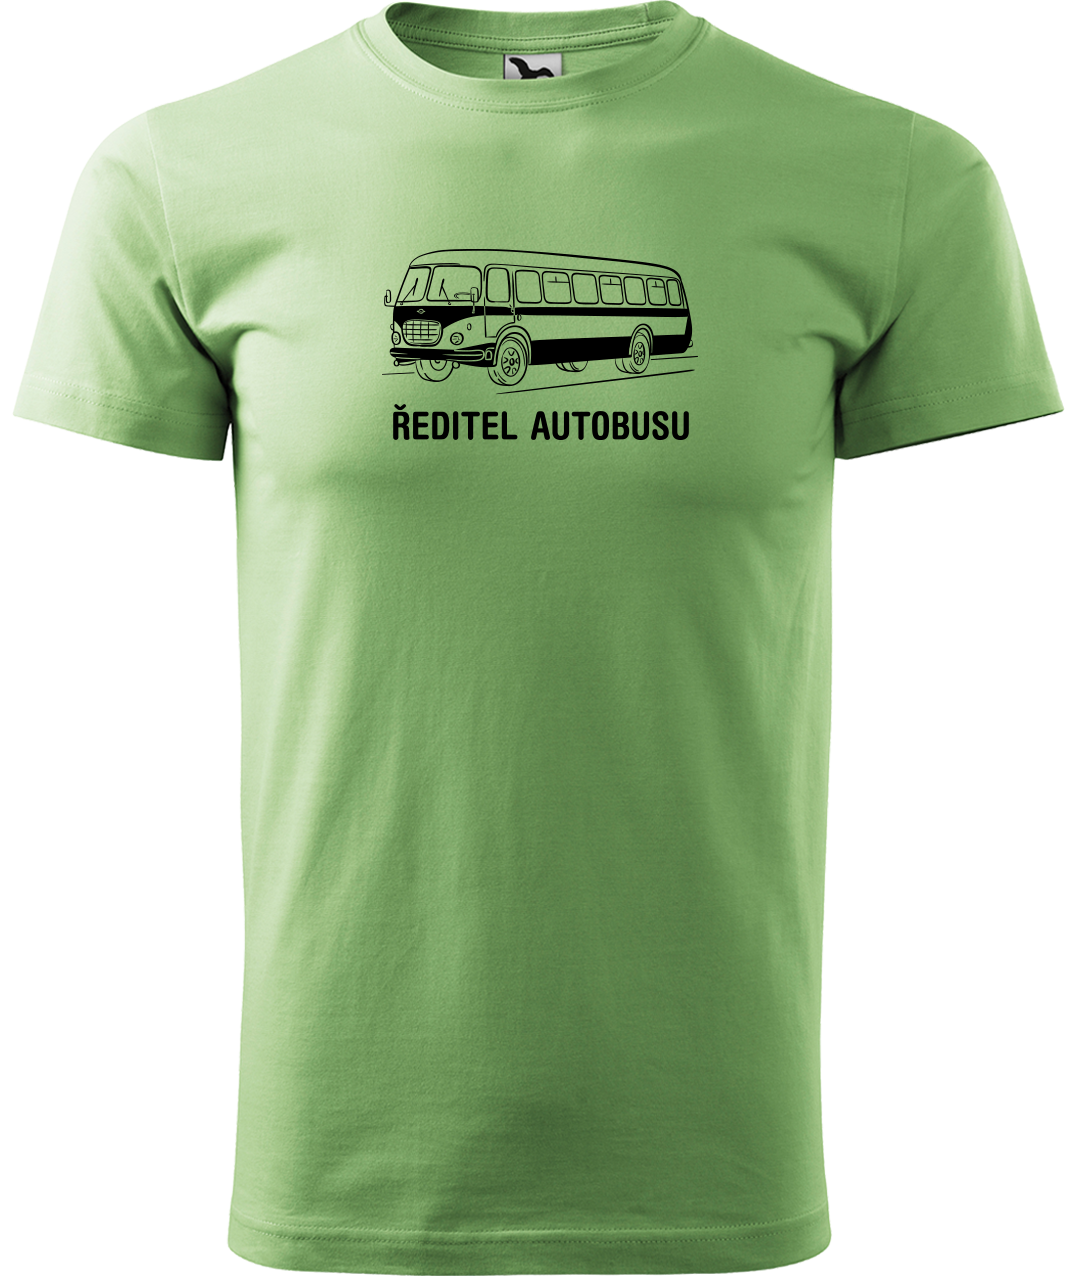 Tričko s autobusem - Ředitel autobusu Velikost: S, Barva: Apple Green (92)